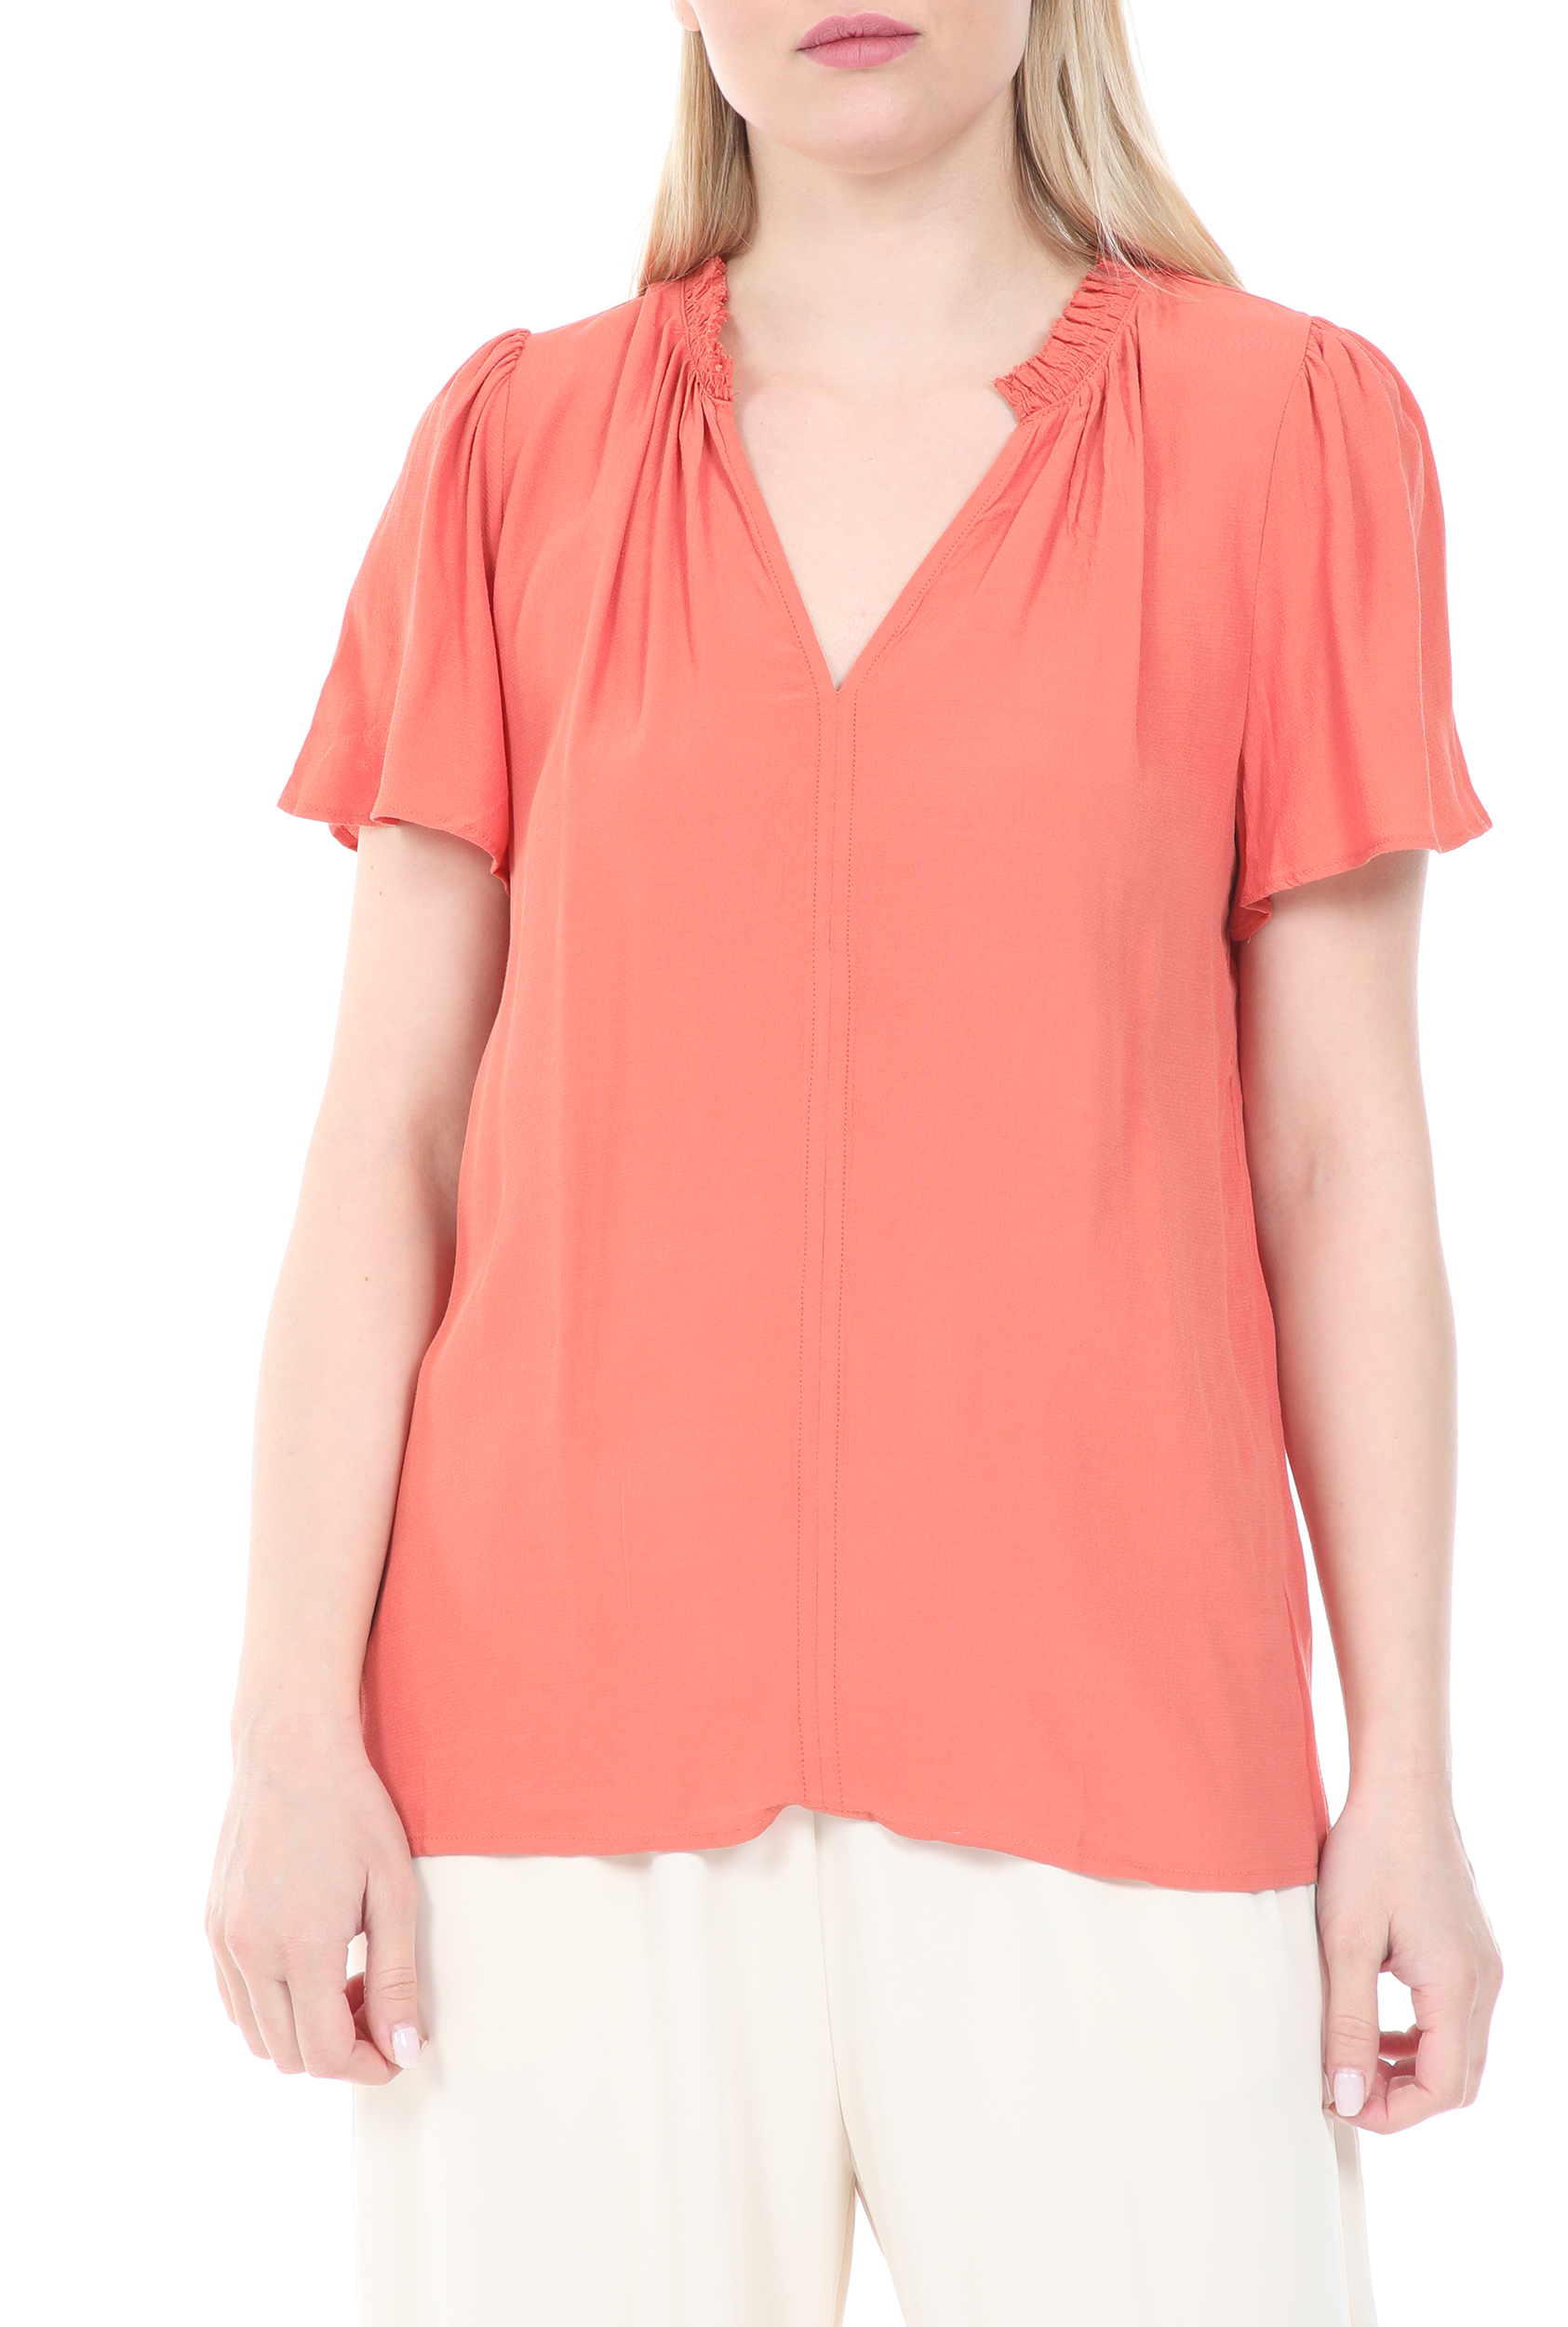 GRACE AND MILA – Γυναικεία μπλούζα GRACE AND MILA CASPIAN πορτοκαλί 1812264.0-00O7